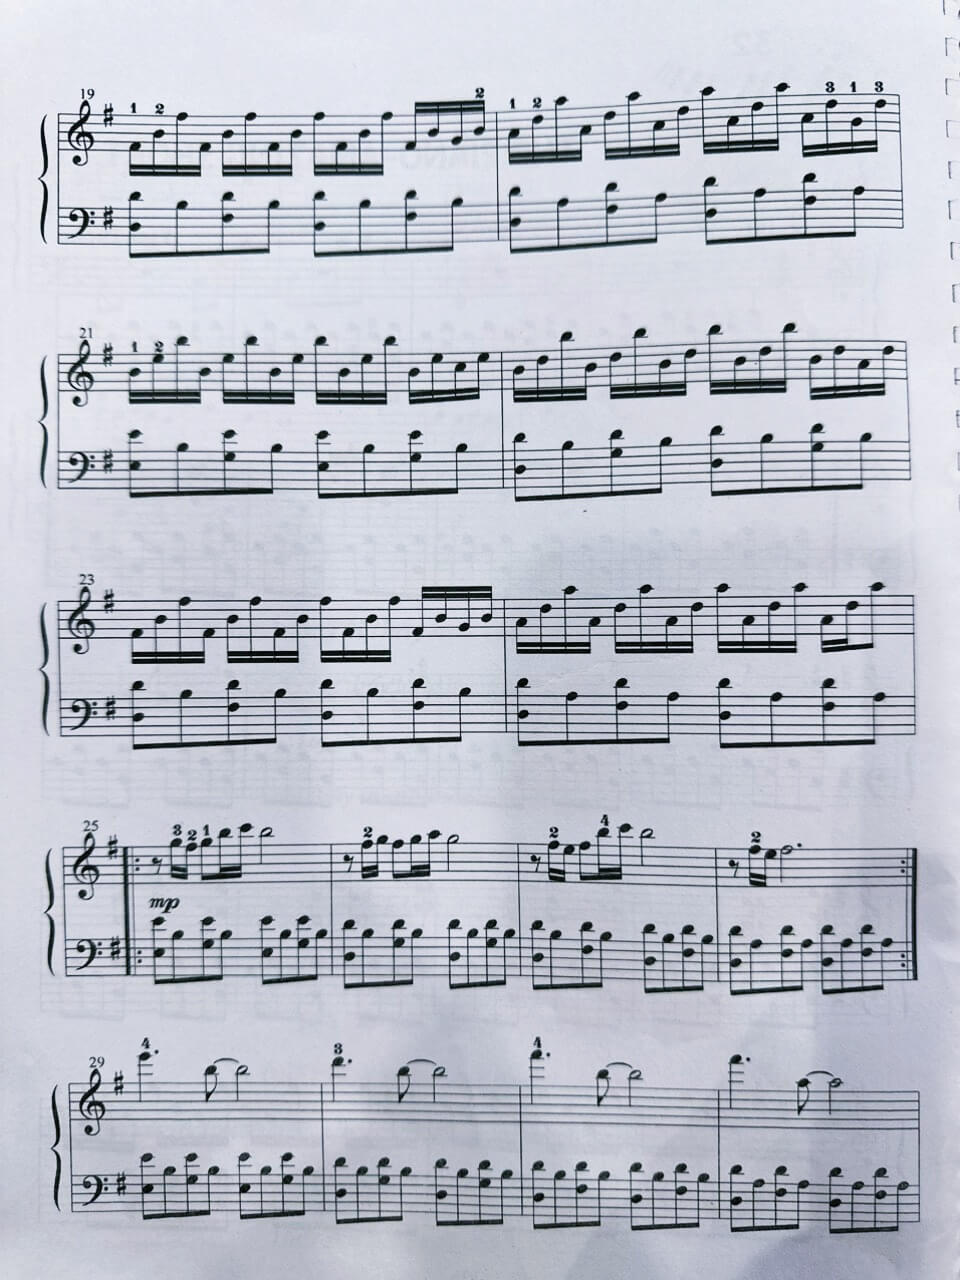 The piano amazing short 2